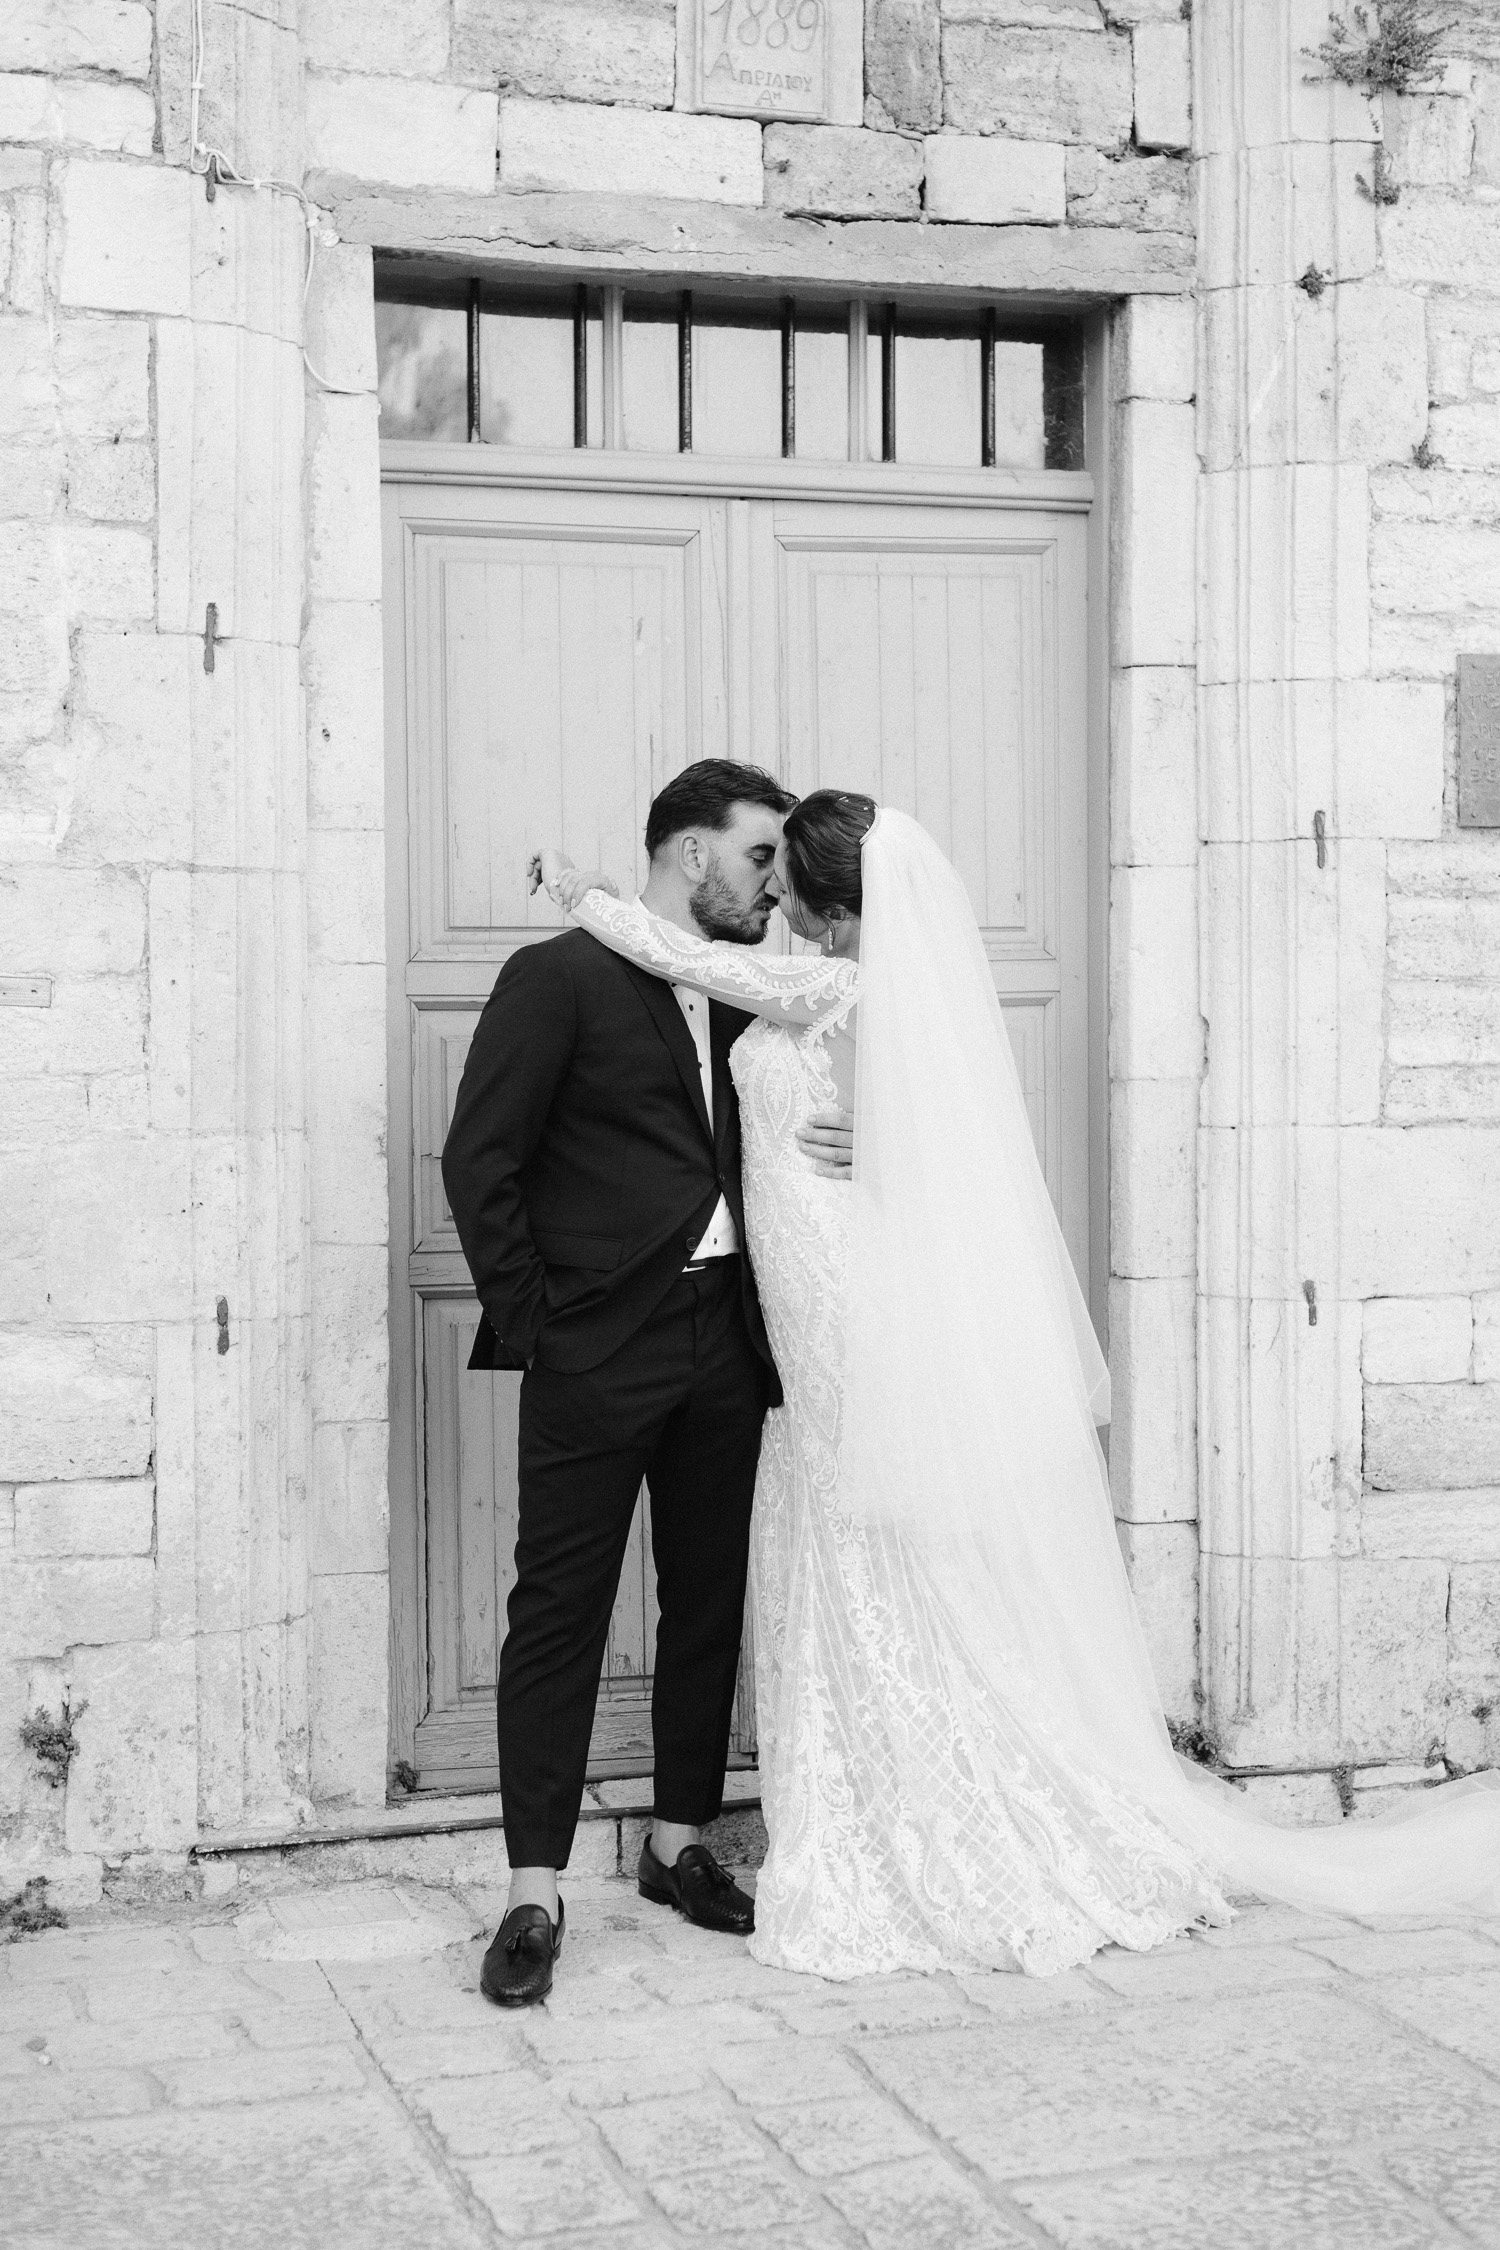 Film noir inspiration post wedding shooting, fine art photography in greece